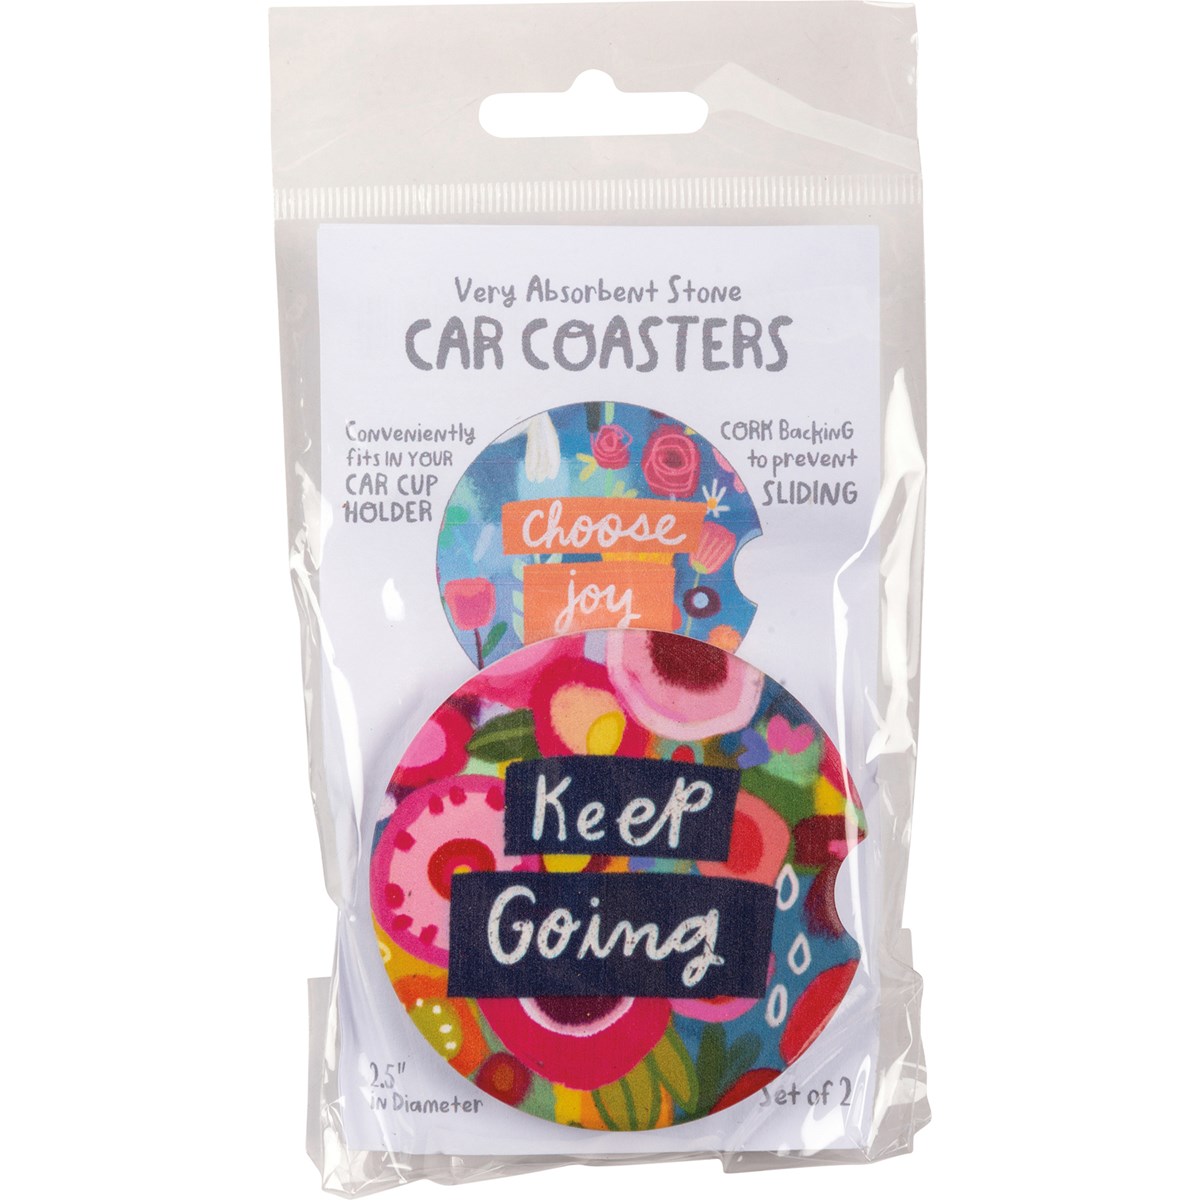 Keep Going Car Coasters - Stone, Cork